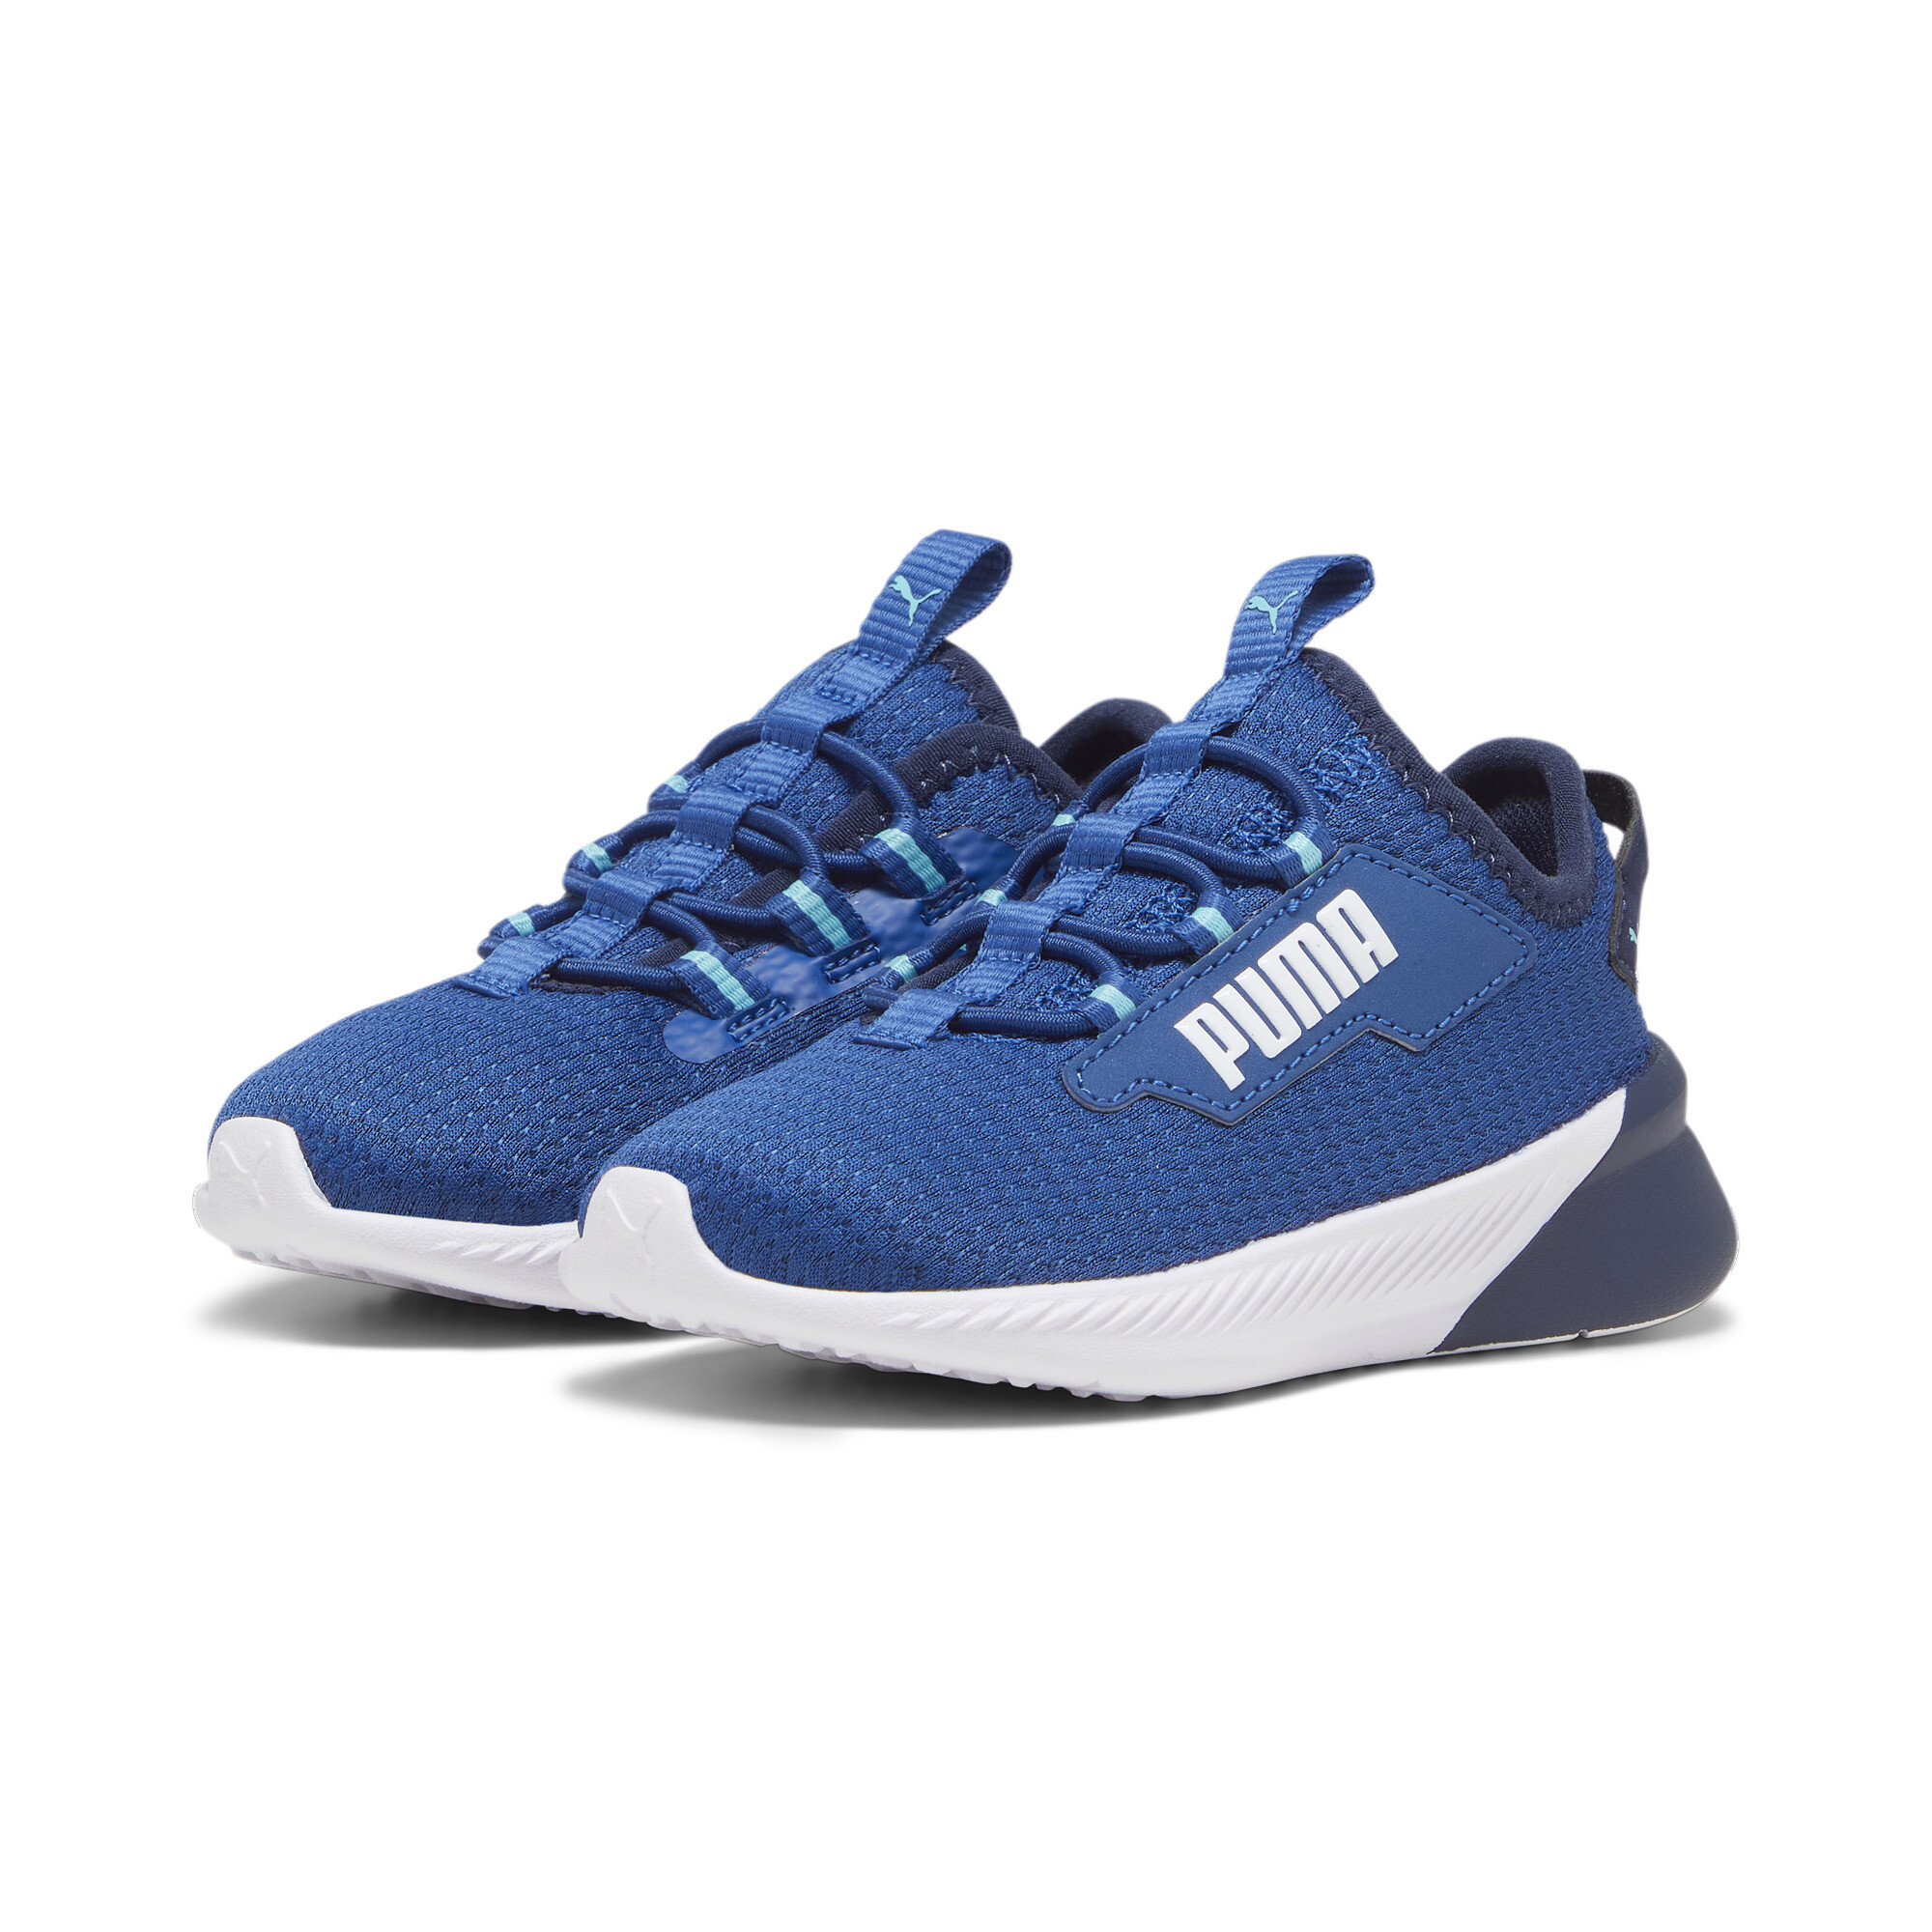 Puma Retaliate 2 AC Sneakers Babies, Blue, Size 19, Shoes